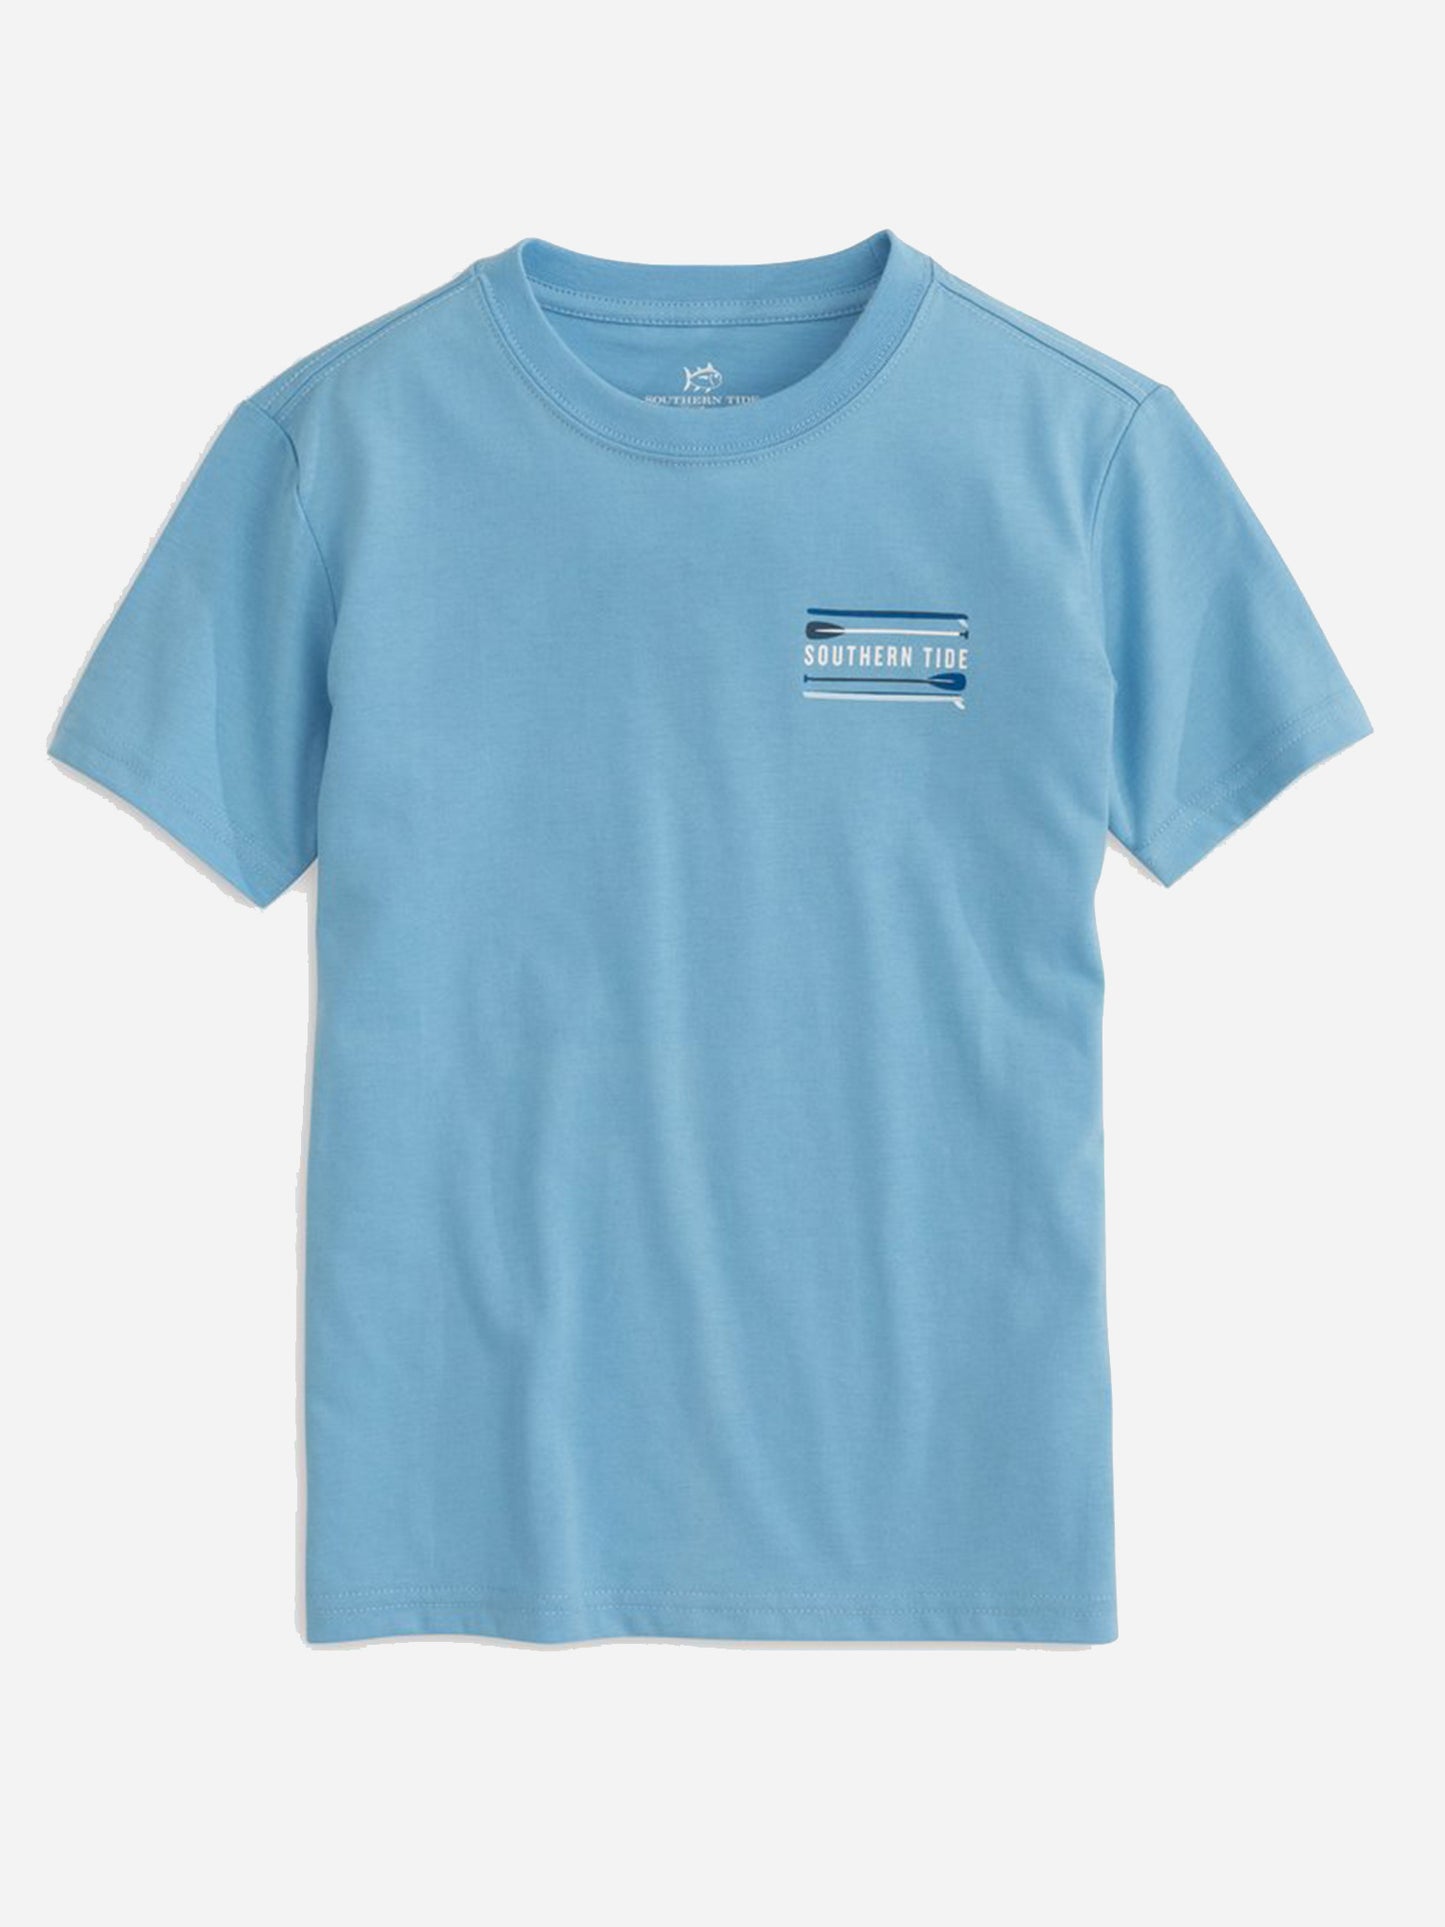 Southern Tide Boys' Paddleboard Stack T-Shirt